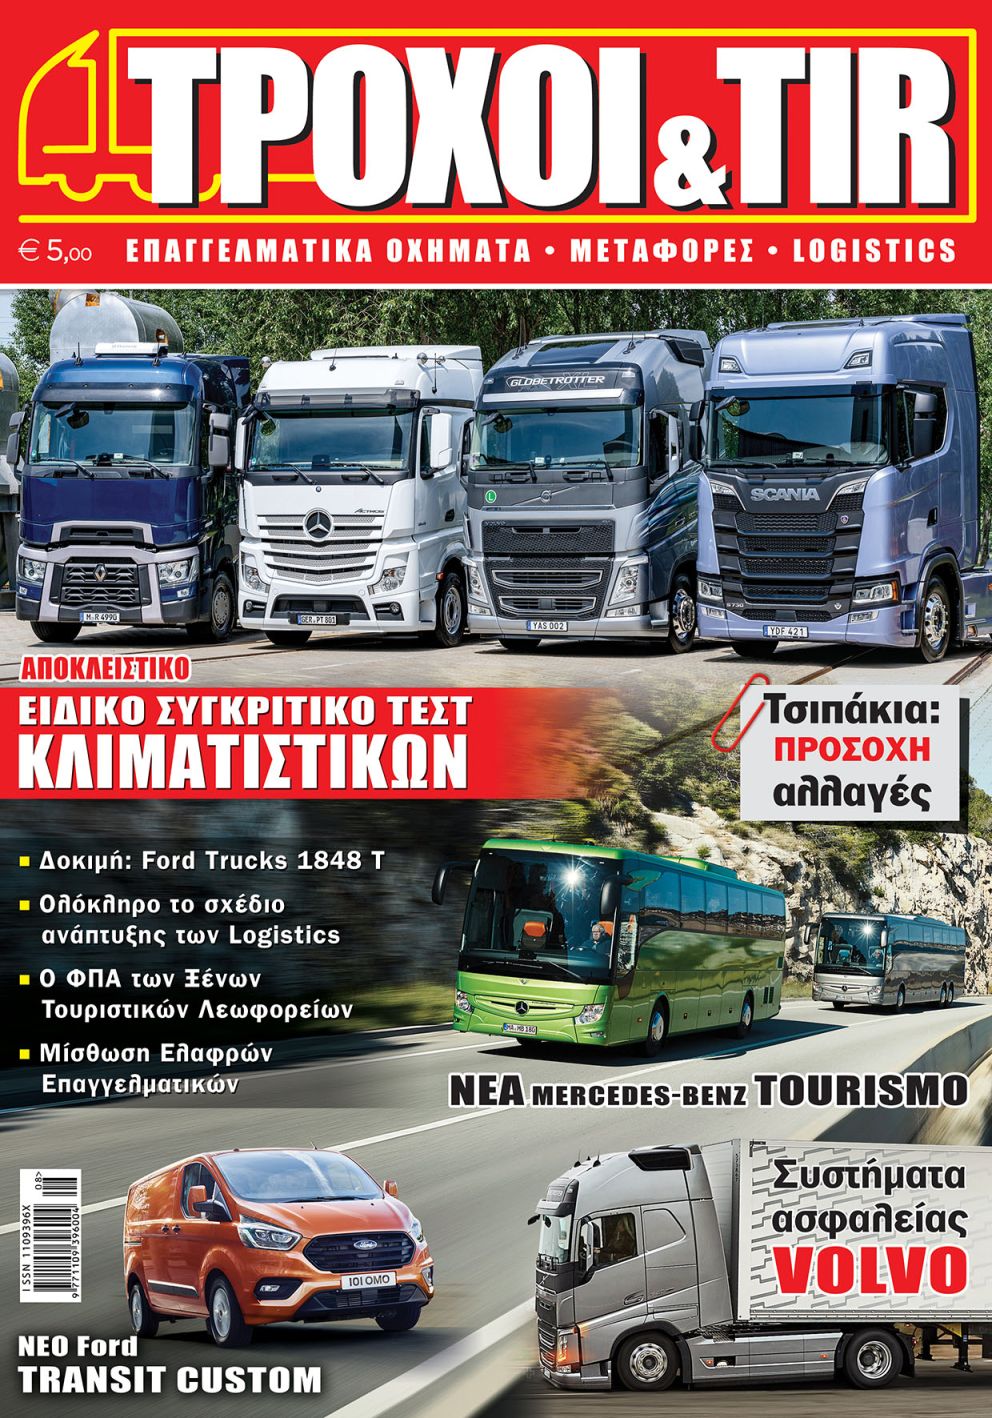 Troxoikaitir issue 352 august 2017 cover